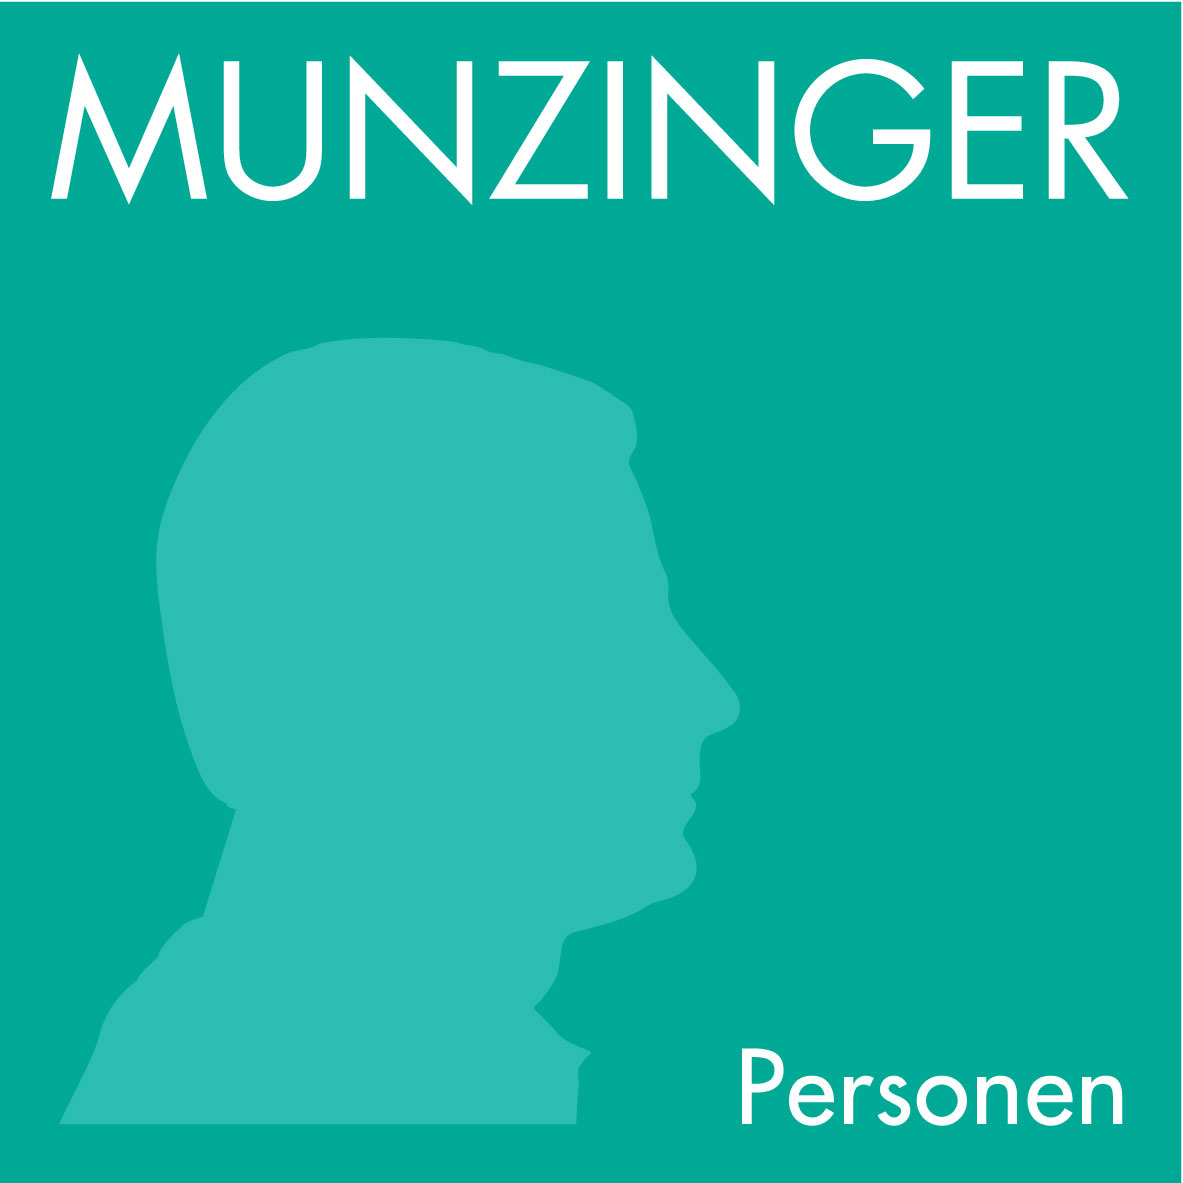 munzinger_personen_128